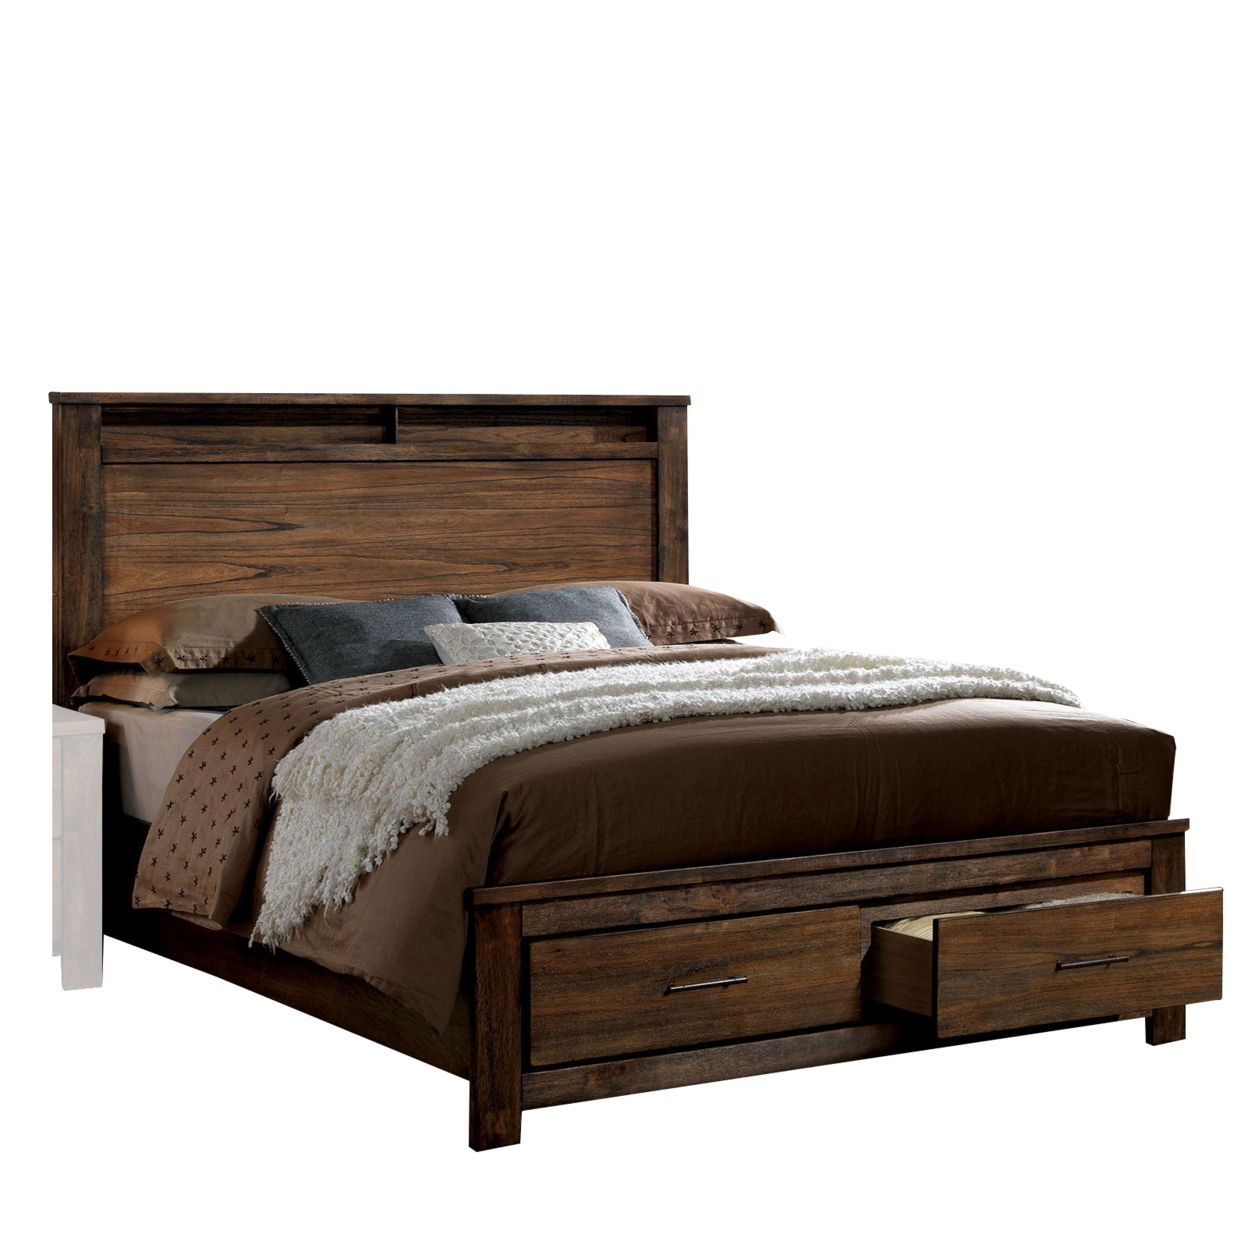 Wooden Queen Size Bed With 2 Drawer Storage, Brown- Saltoro Sherpi